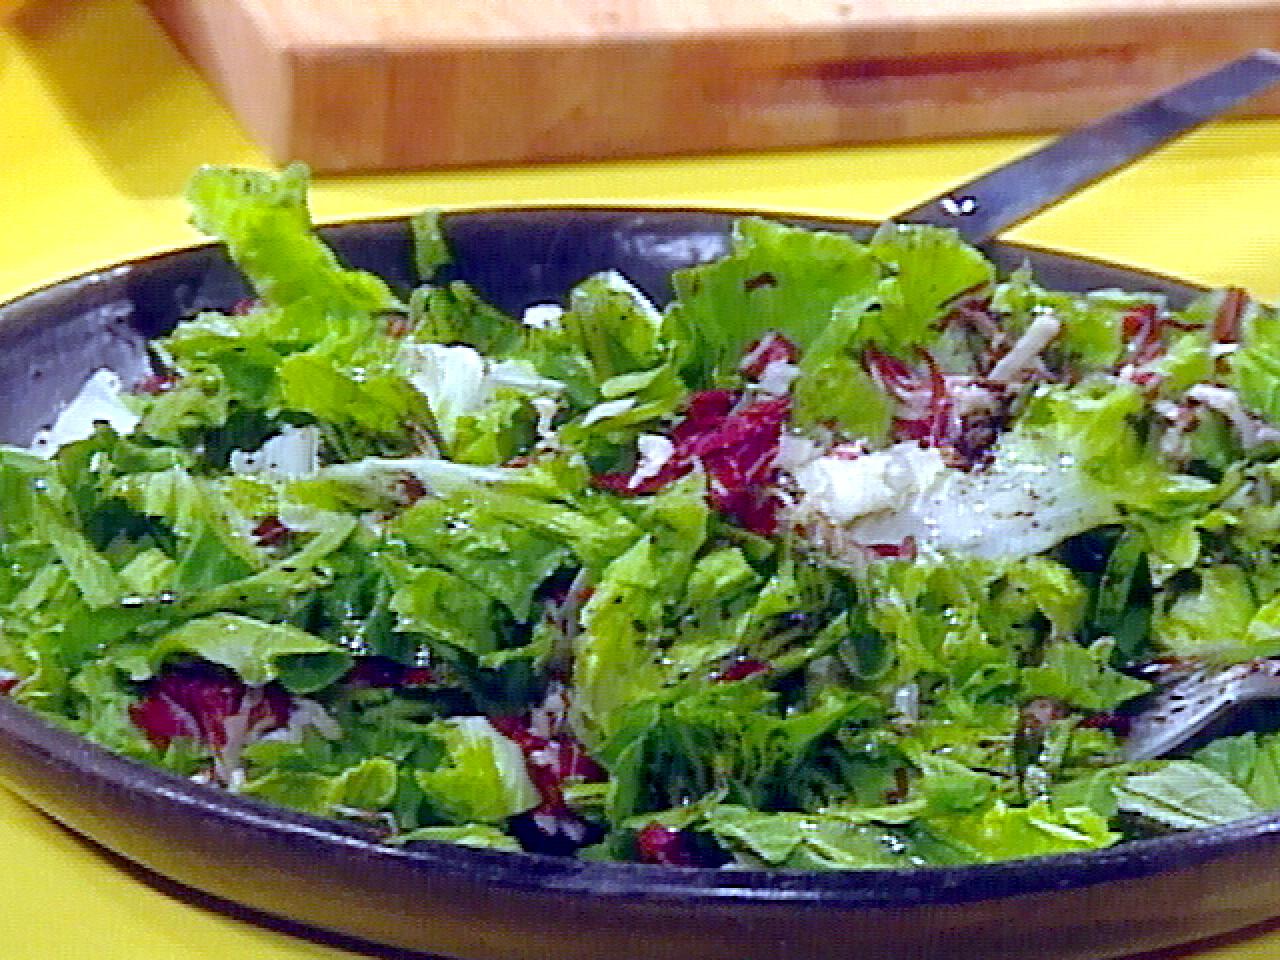 Spicy Balsamic Vinaigrette - A Unique Salad Dressing Recipe